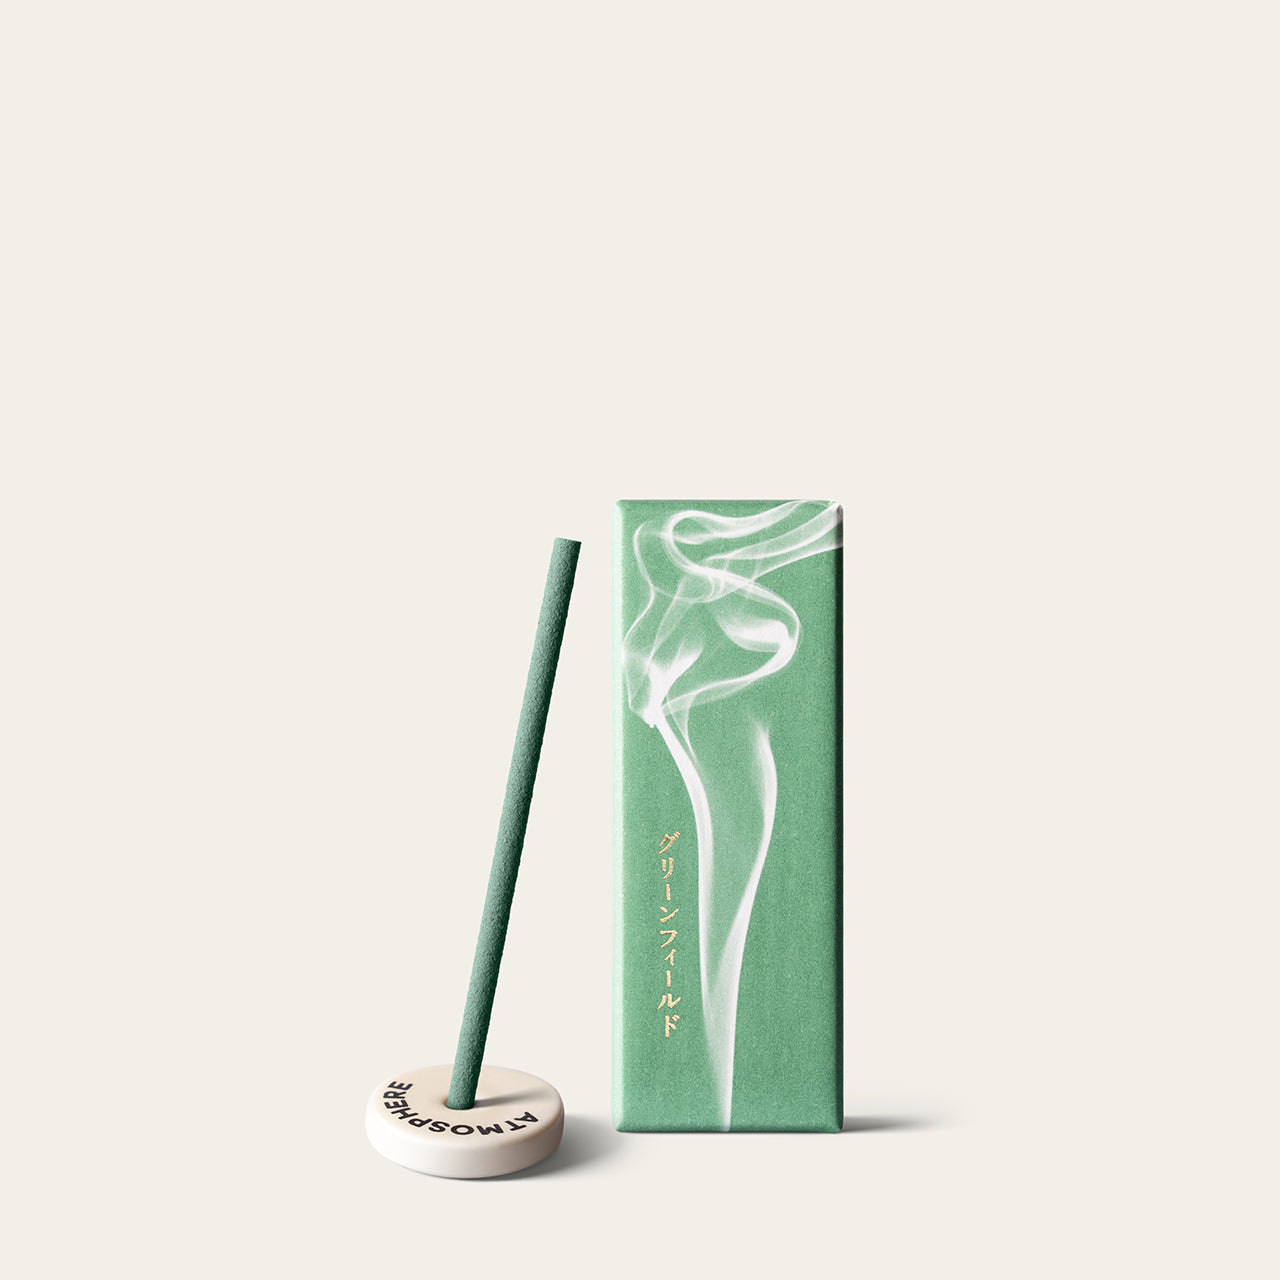 Kyukyodo Fragrance Mini Green Field Japanese incense sticks (20 sticks) with Atmosphere ceramic incense holder